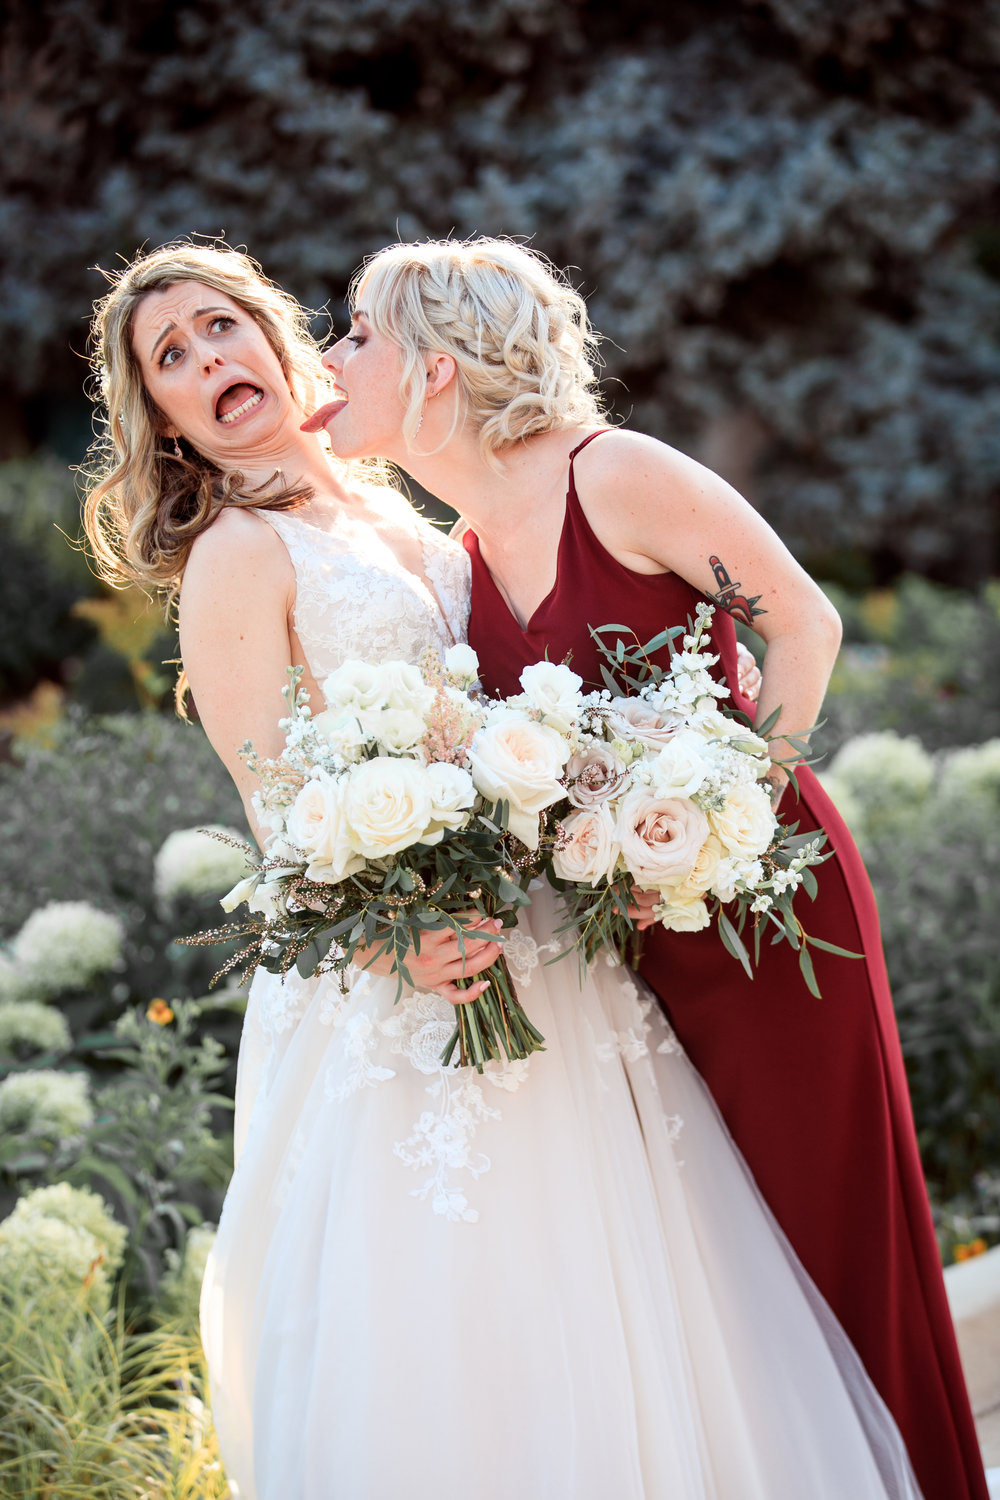 Hilarious-funny-bride-and-groom-take-wedding-photos-to-next-level41.jpg